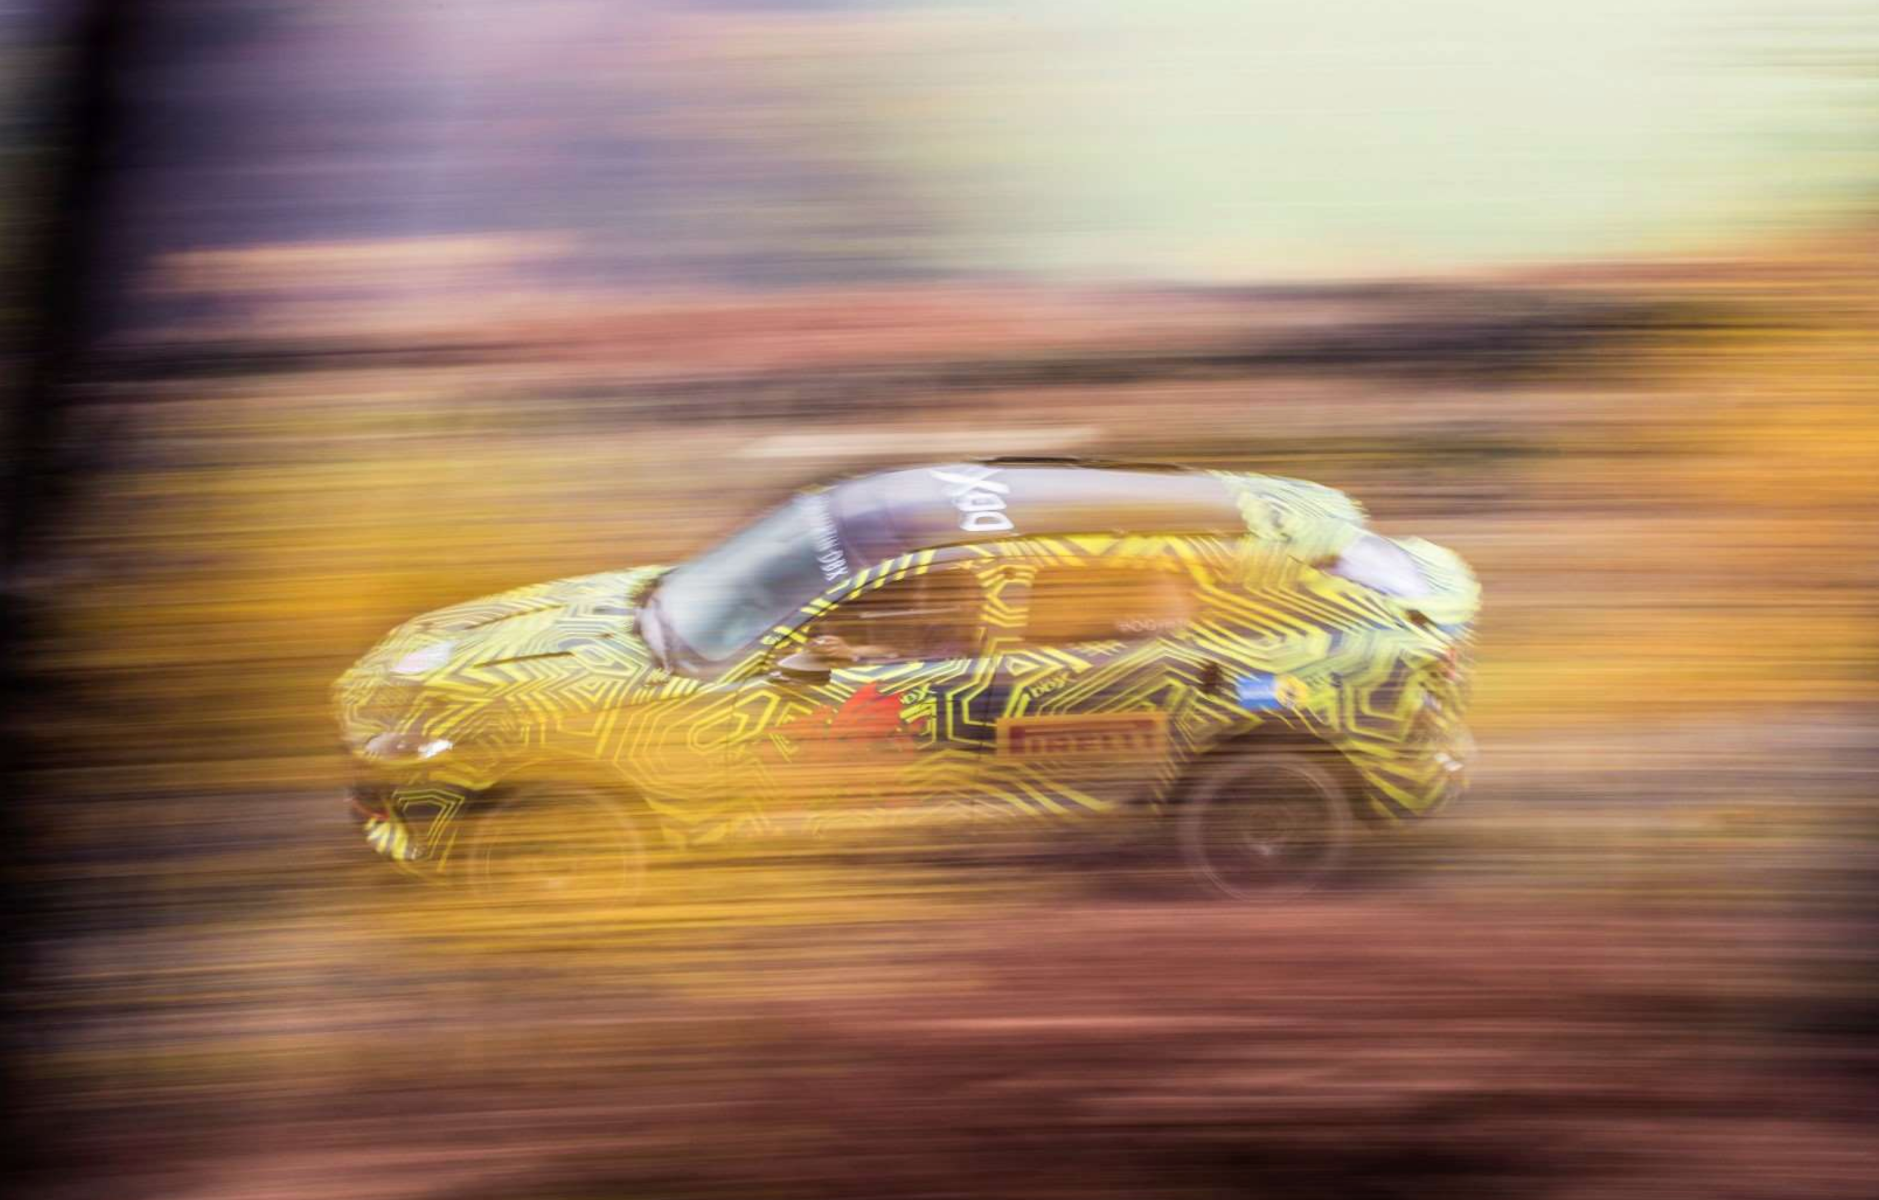 Aston Martin DBX: Reinventing the SUV